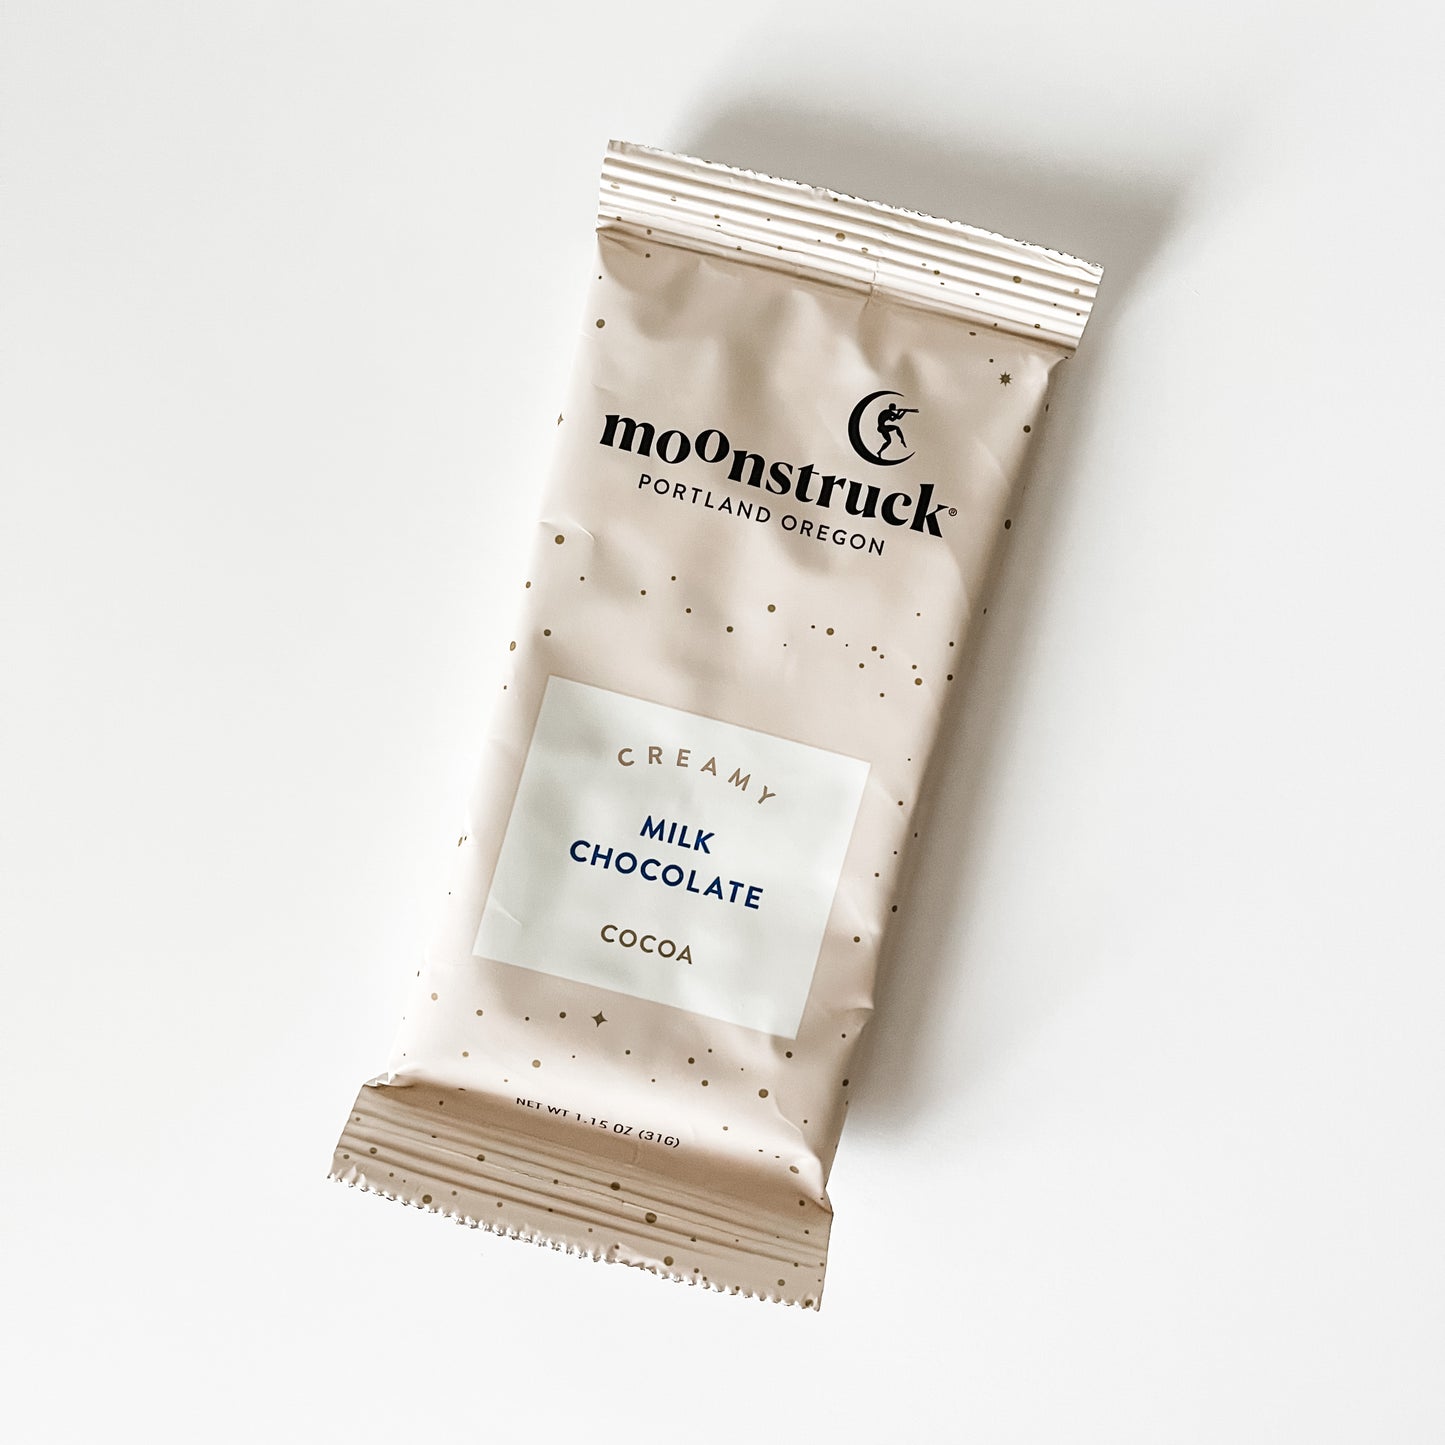 Moonstruck Creamy Milk Chocolate Cocoa